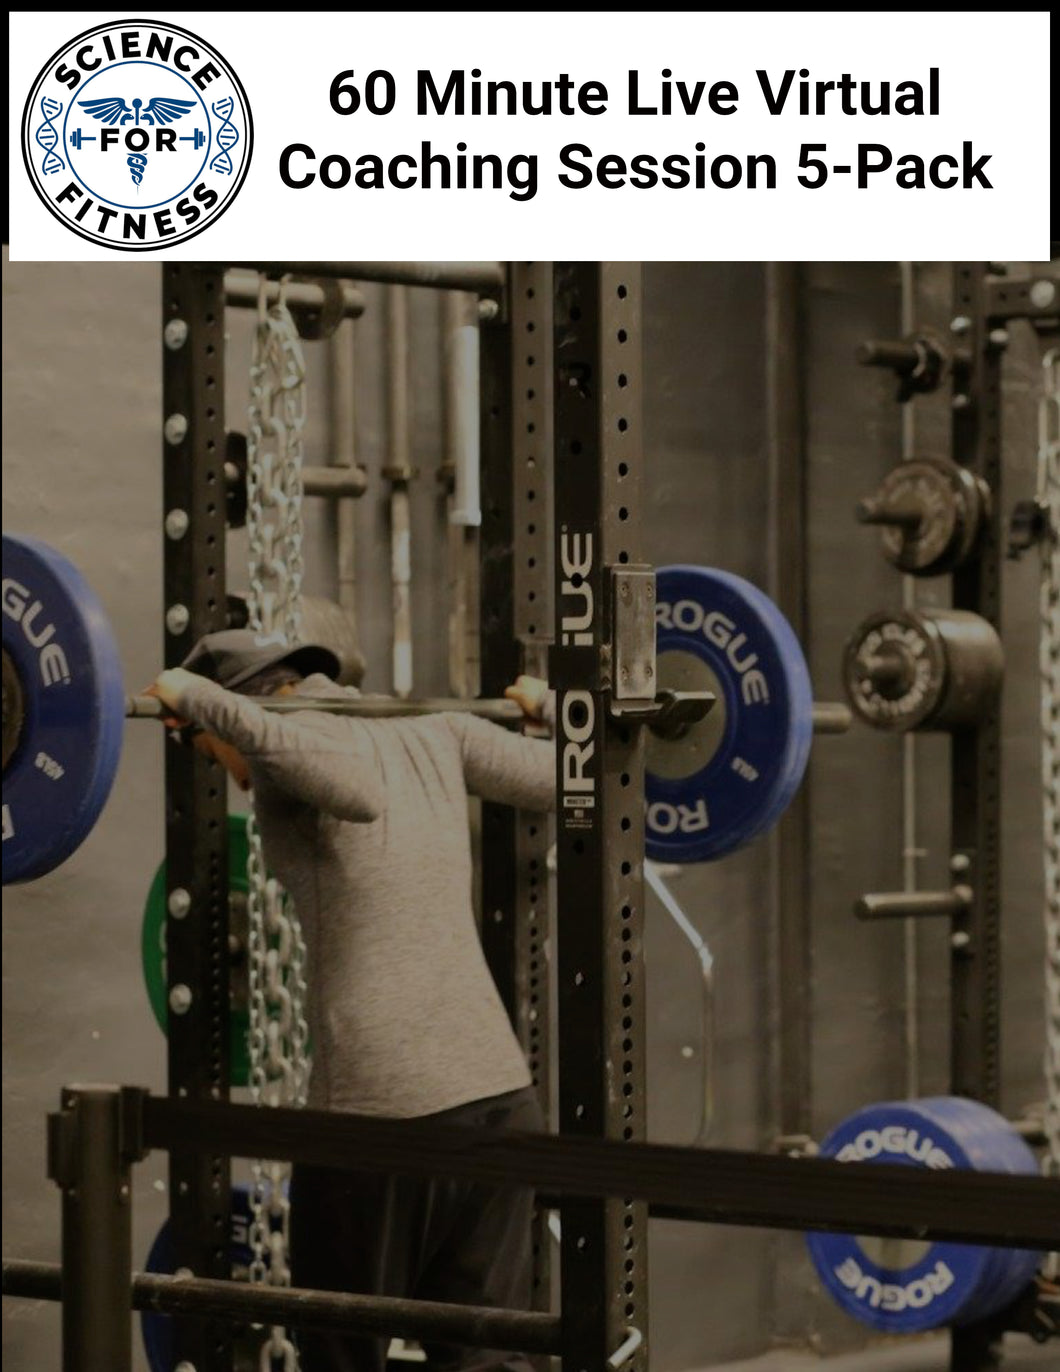 60 Min Live Virtual Coaching Session 5-Pack